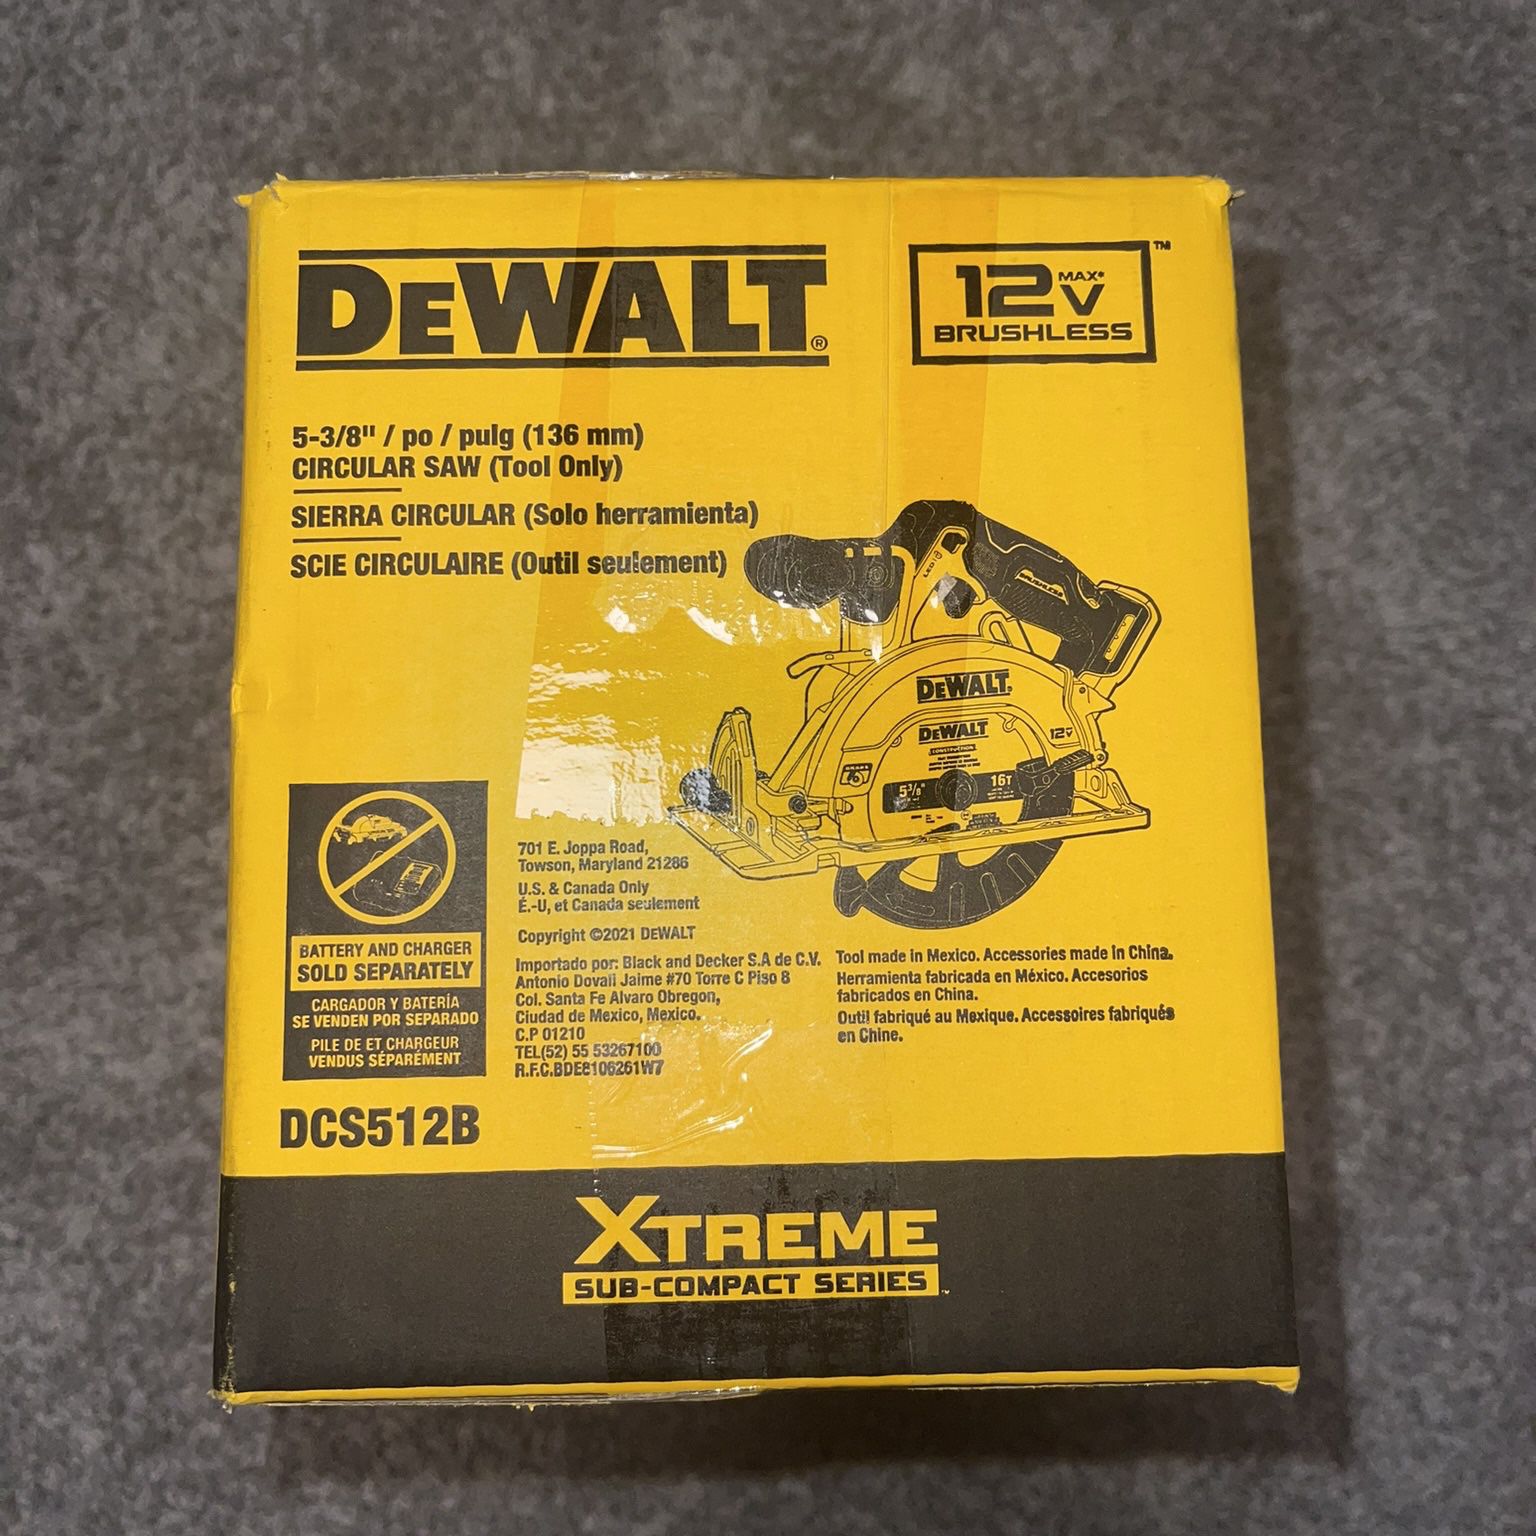 DEWALT XTREME 12-volt Max 5-3/8-in Brushless Cordless Circular Saw